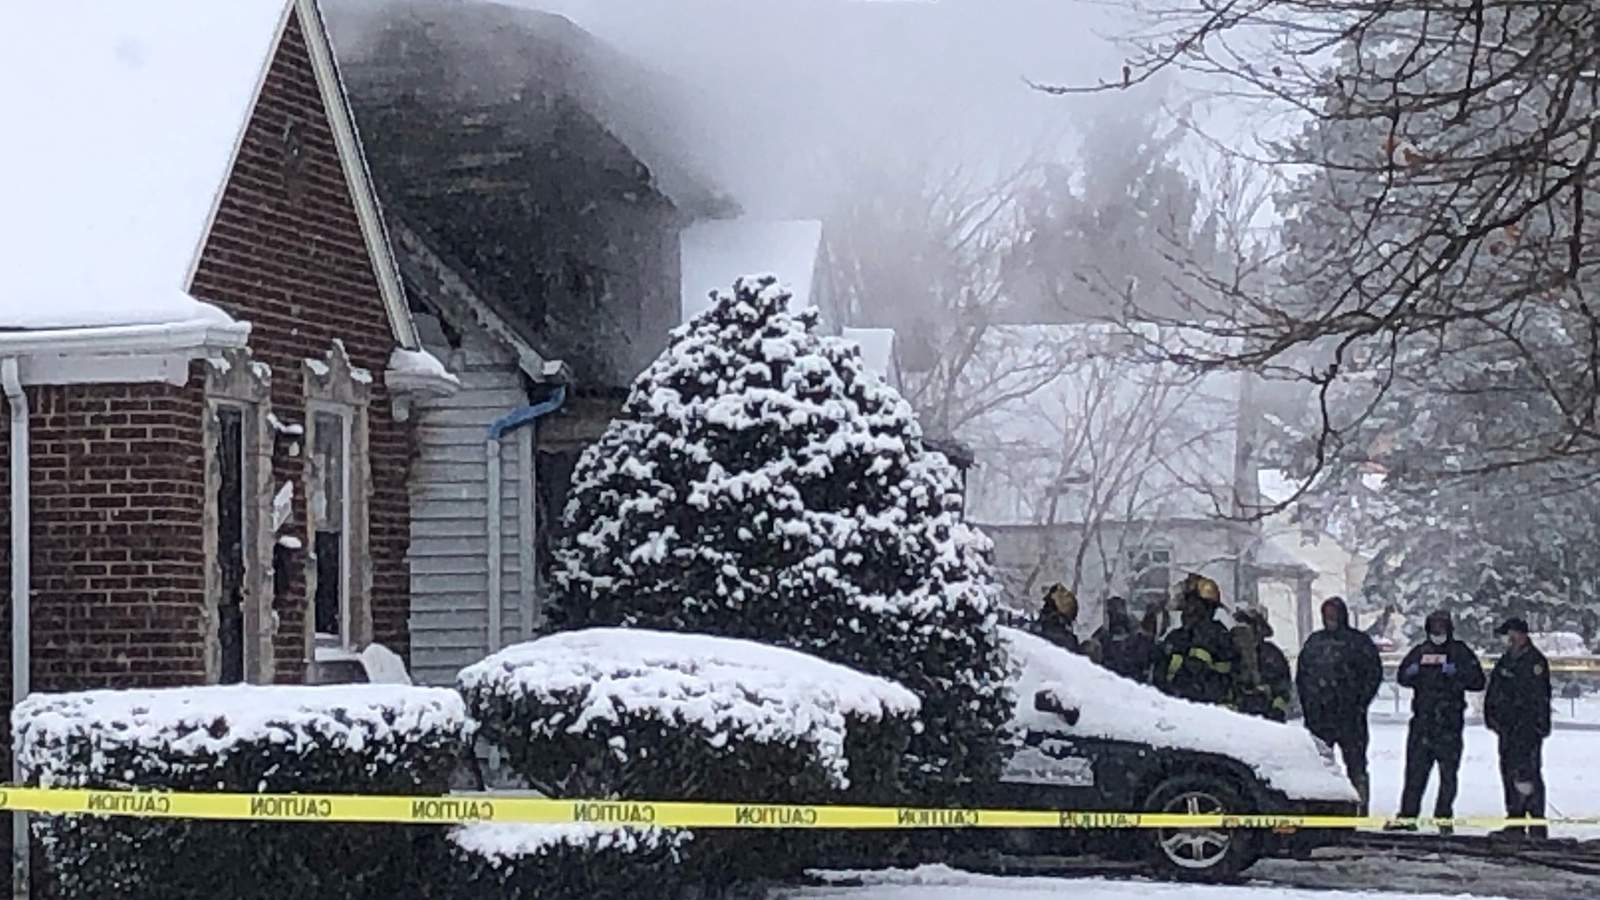 2 children die in house fire on Christmas morning in Detroit